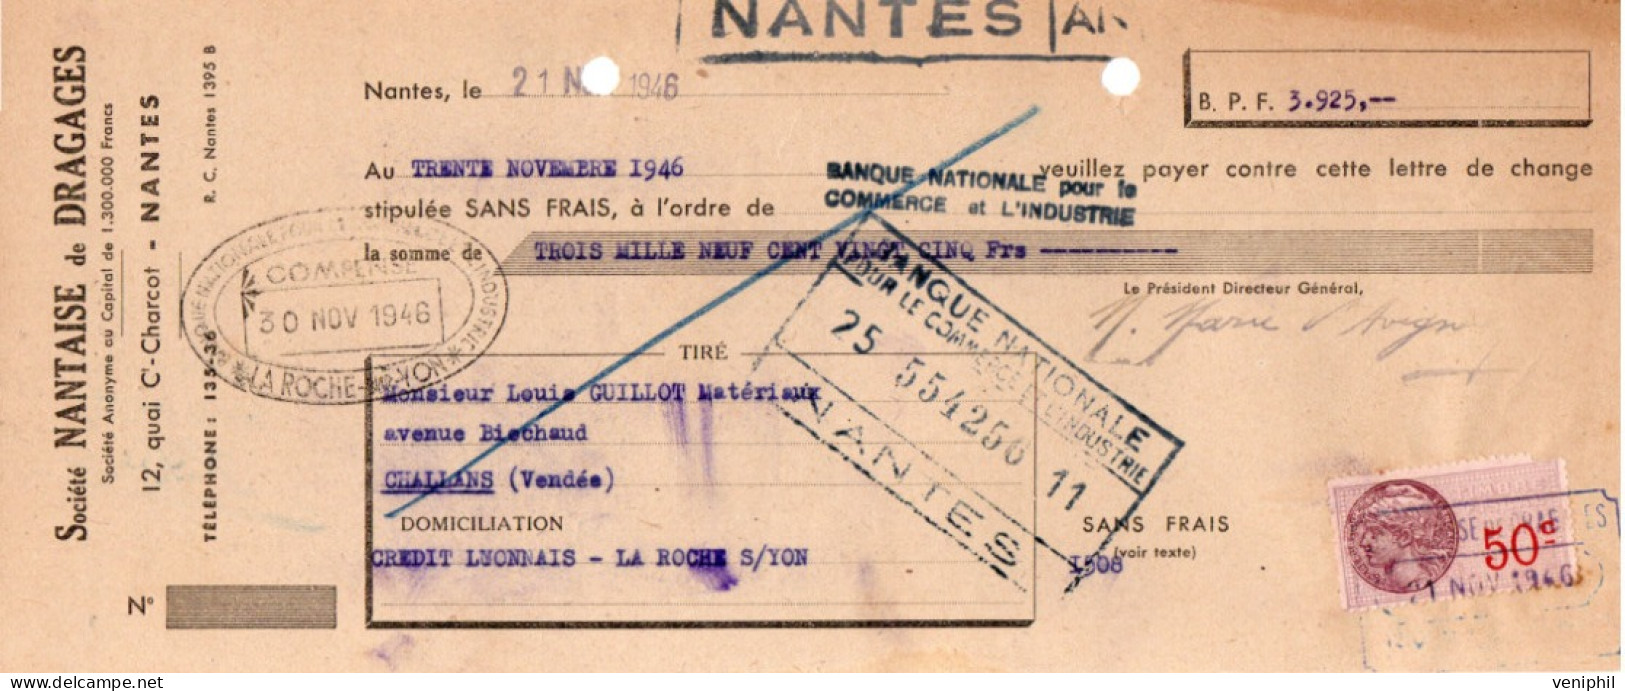 LETTRE  DE CHANGETIMBREE- SOCIETE NANTAISE DE DRAGAGES -NANTES - ANNEE 1946 - Letras De Cambio